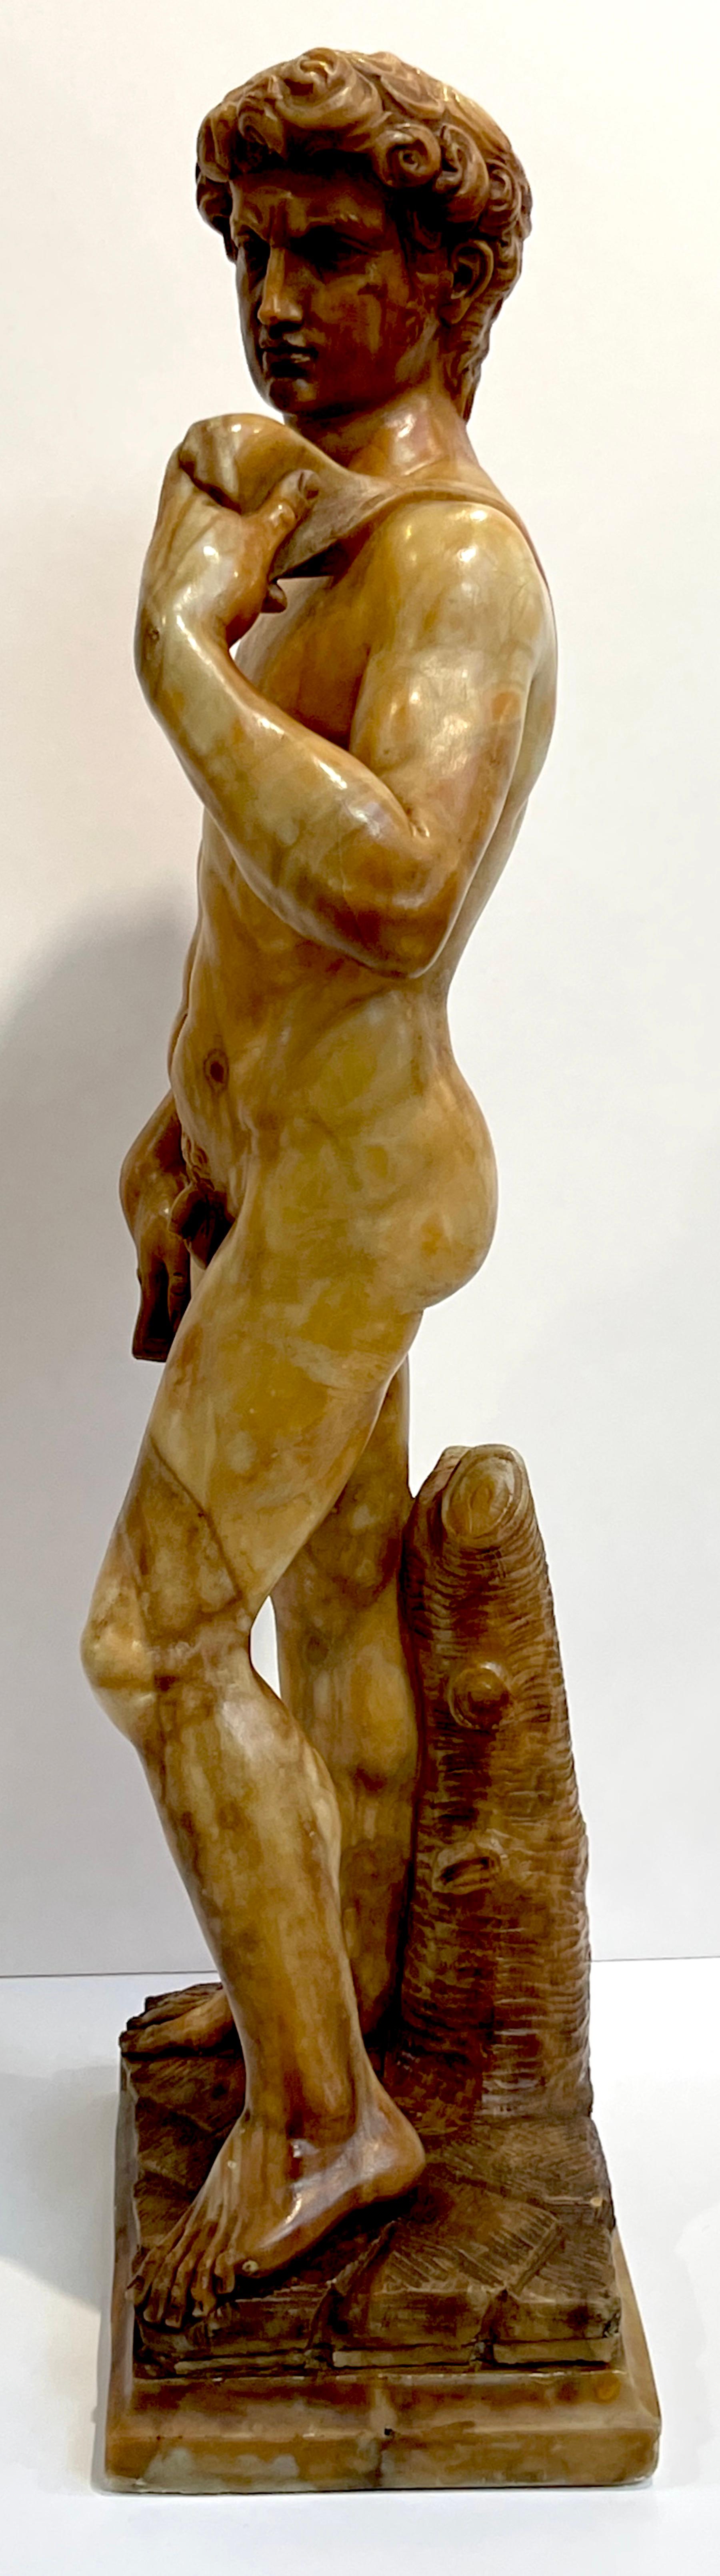 Grand Tour Tortoiseshell Quartz/Mable Sculpture of Michelangelo's David For Sale 9